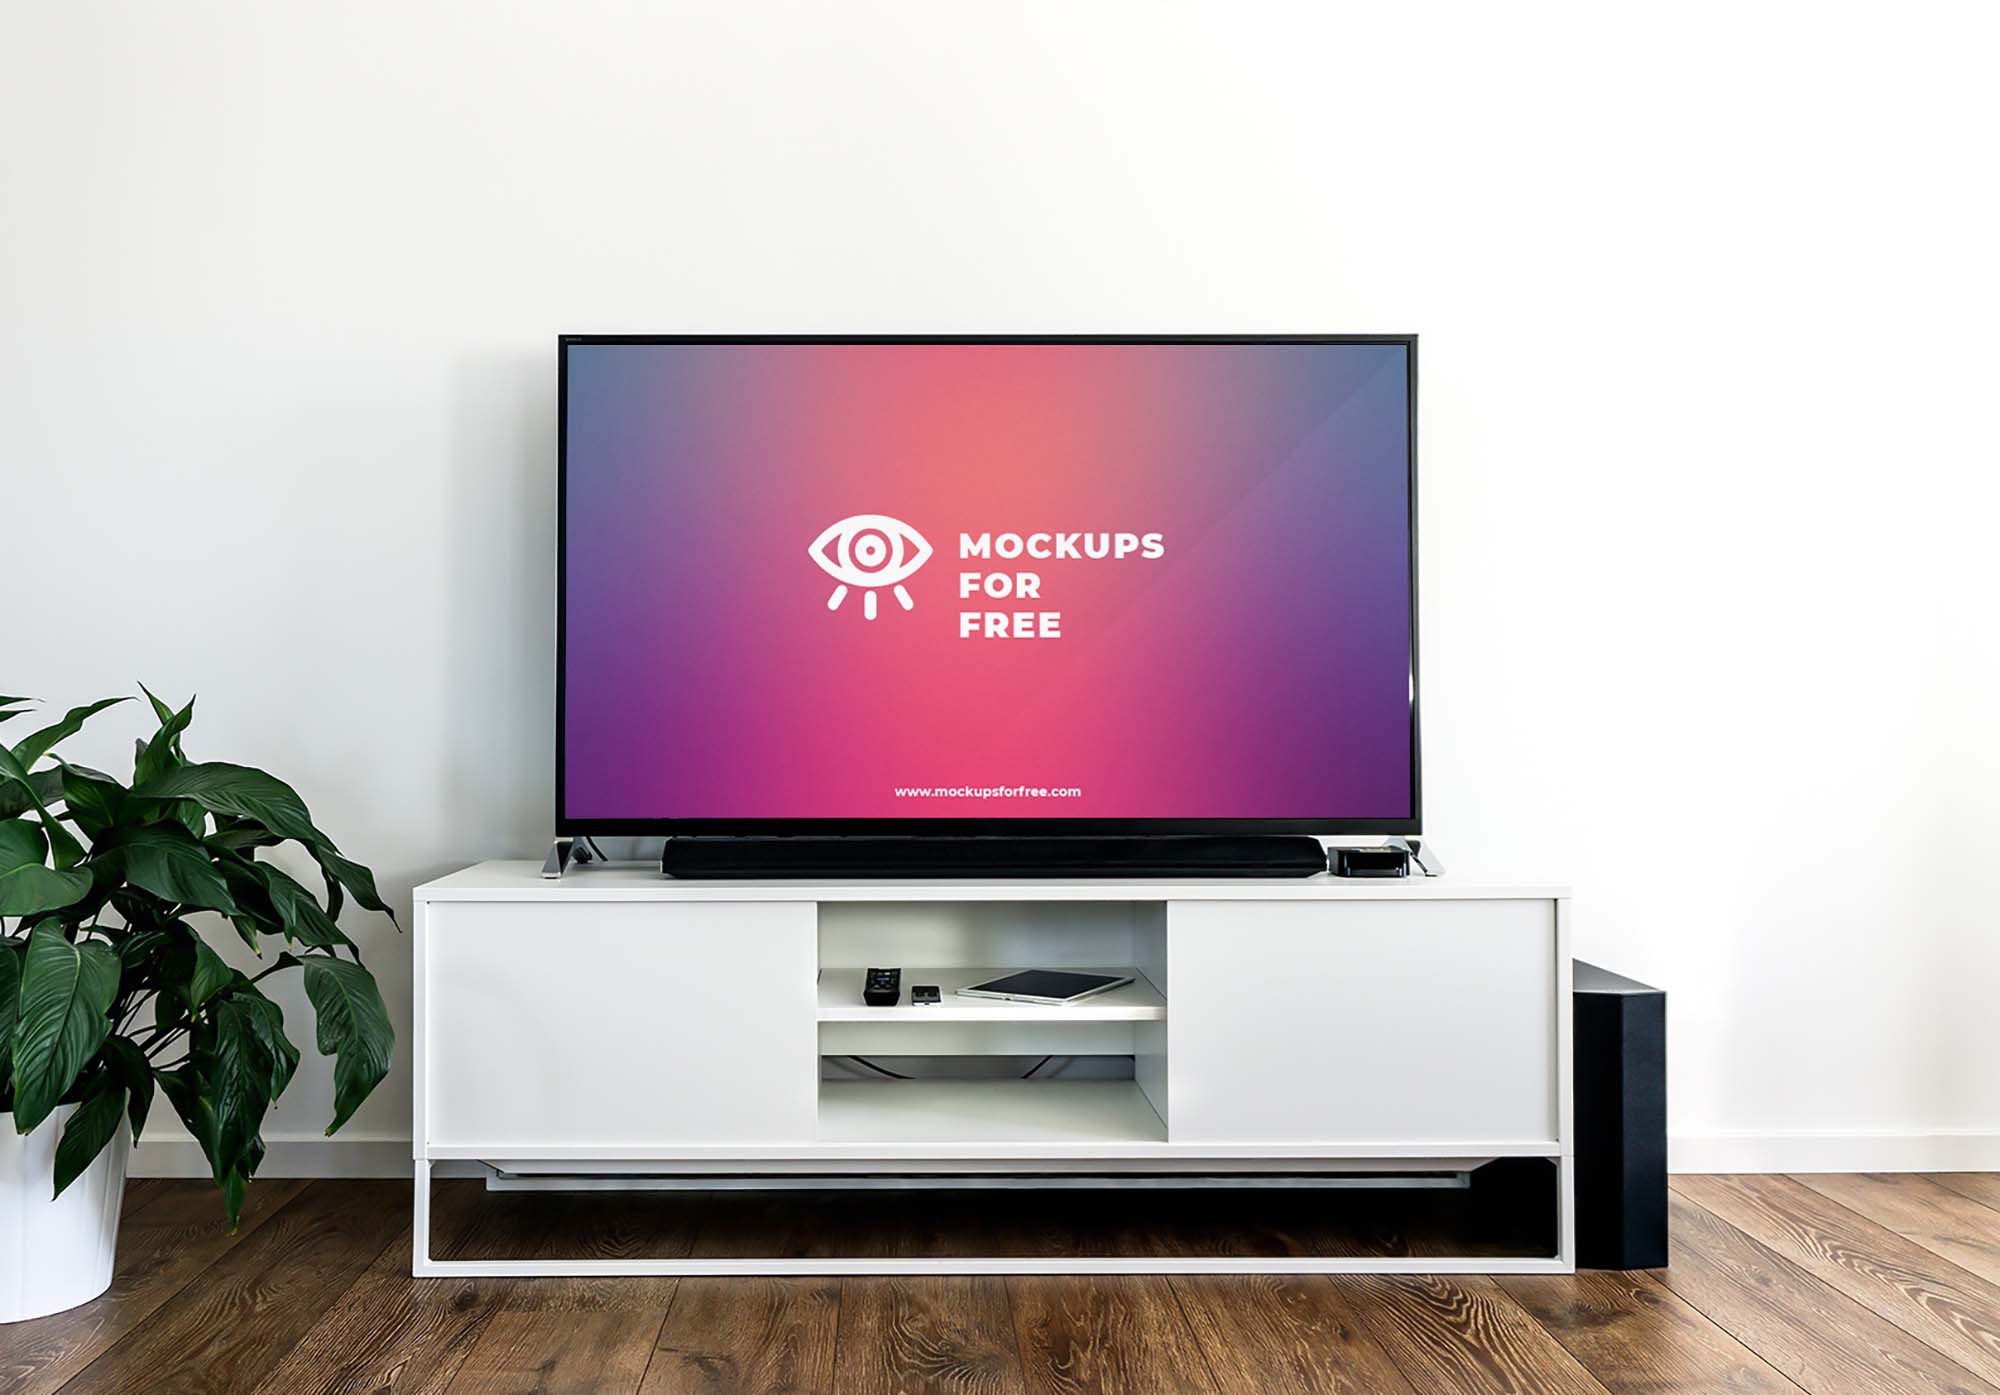 Download 30 High End Tv Mockup Templates For Rich Presentation Decolore Net